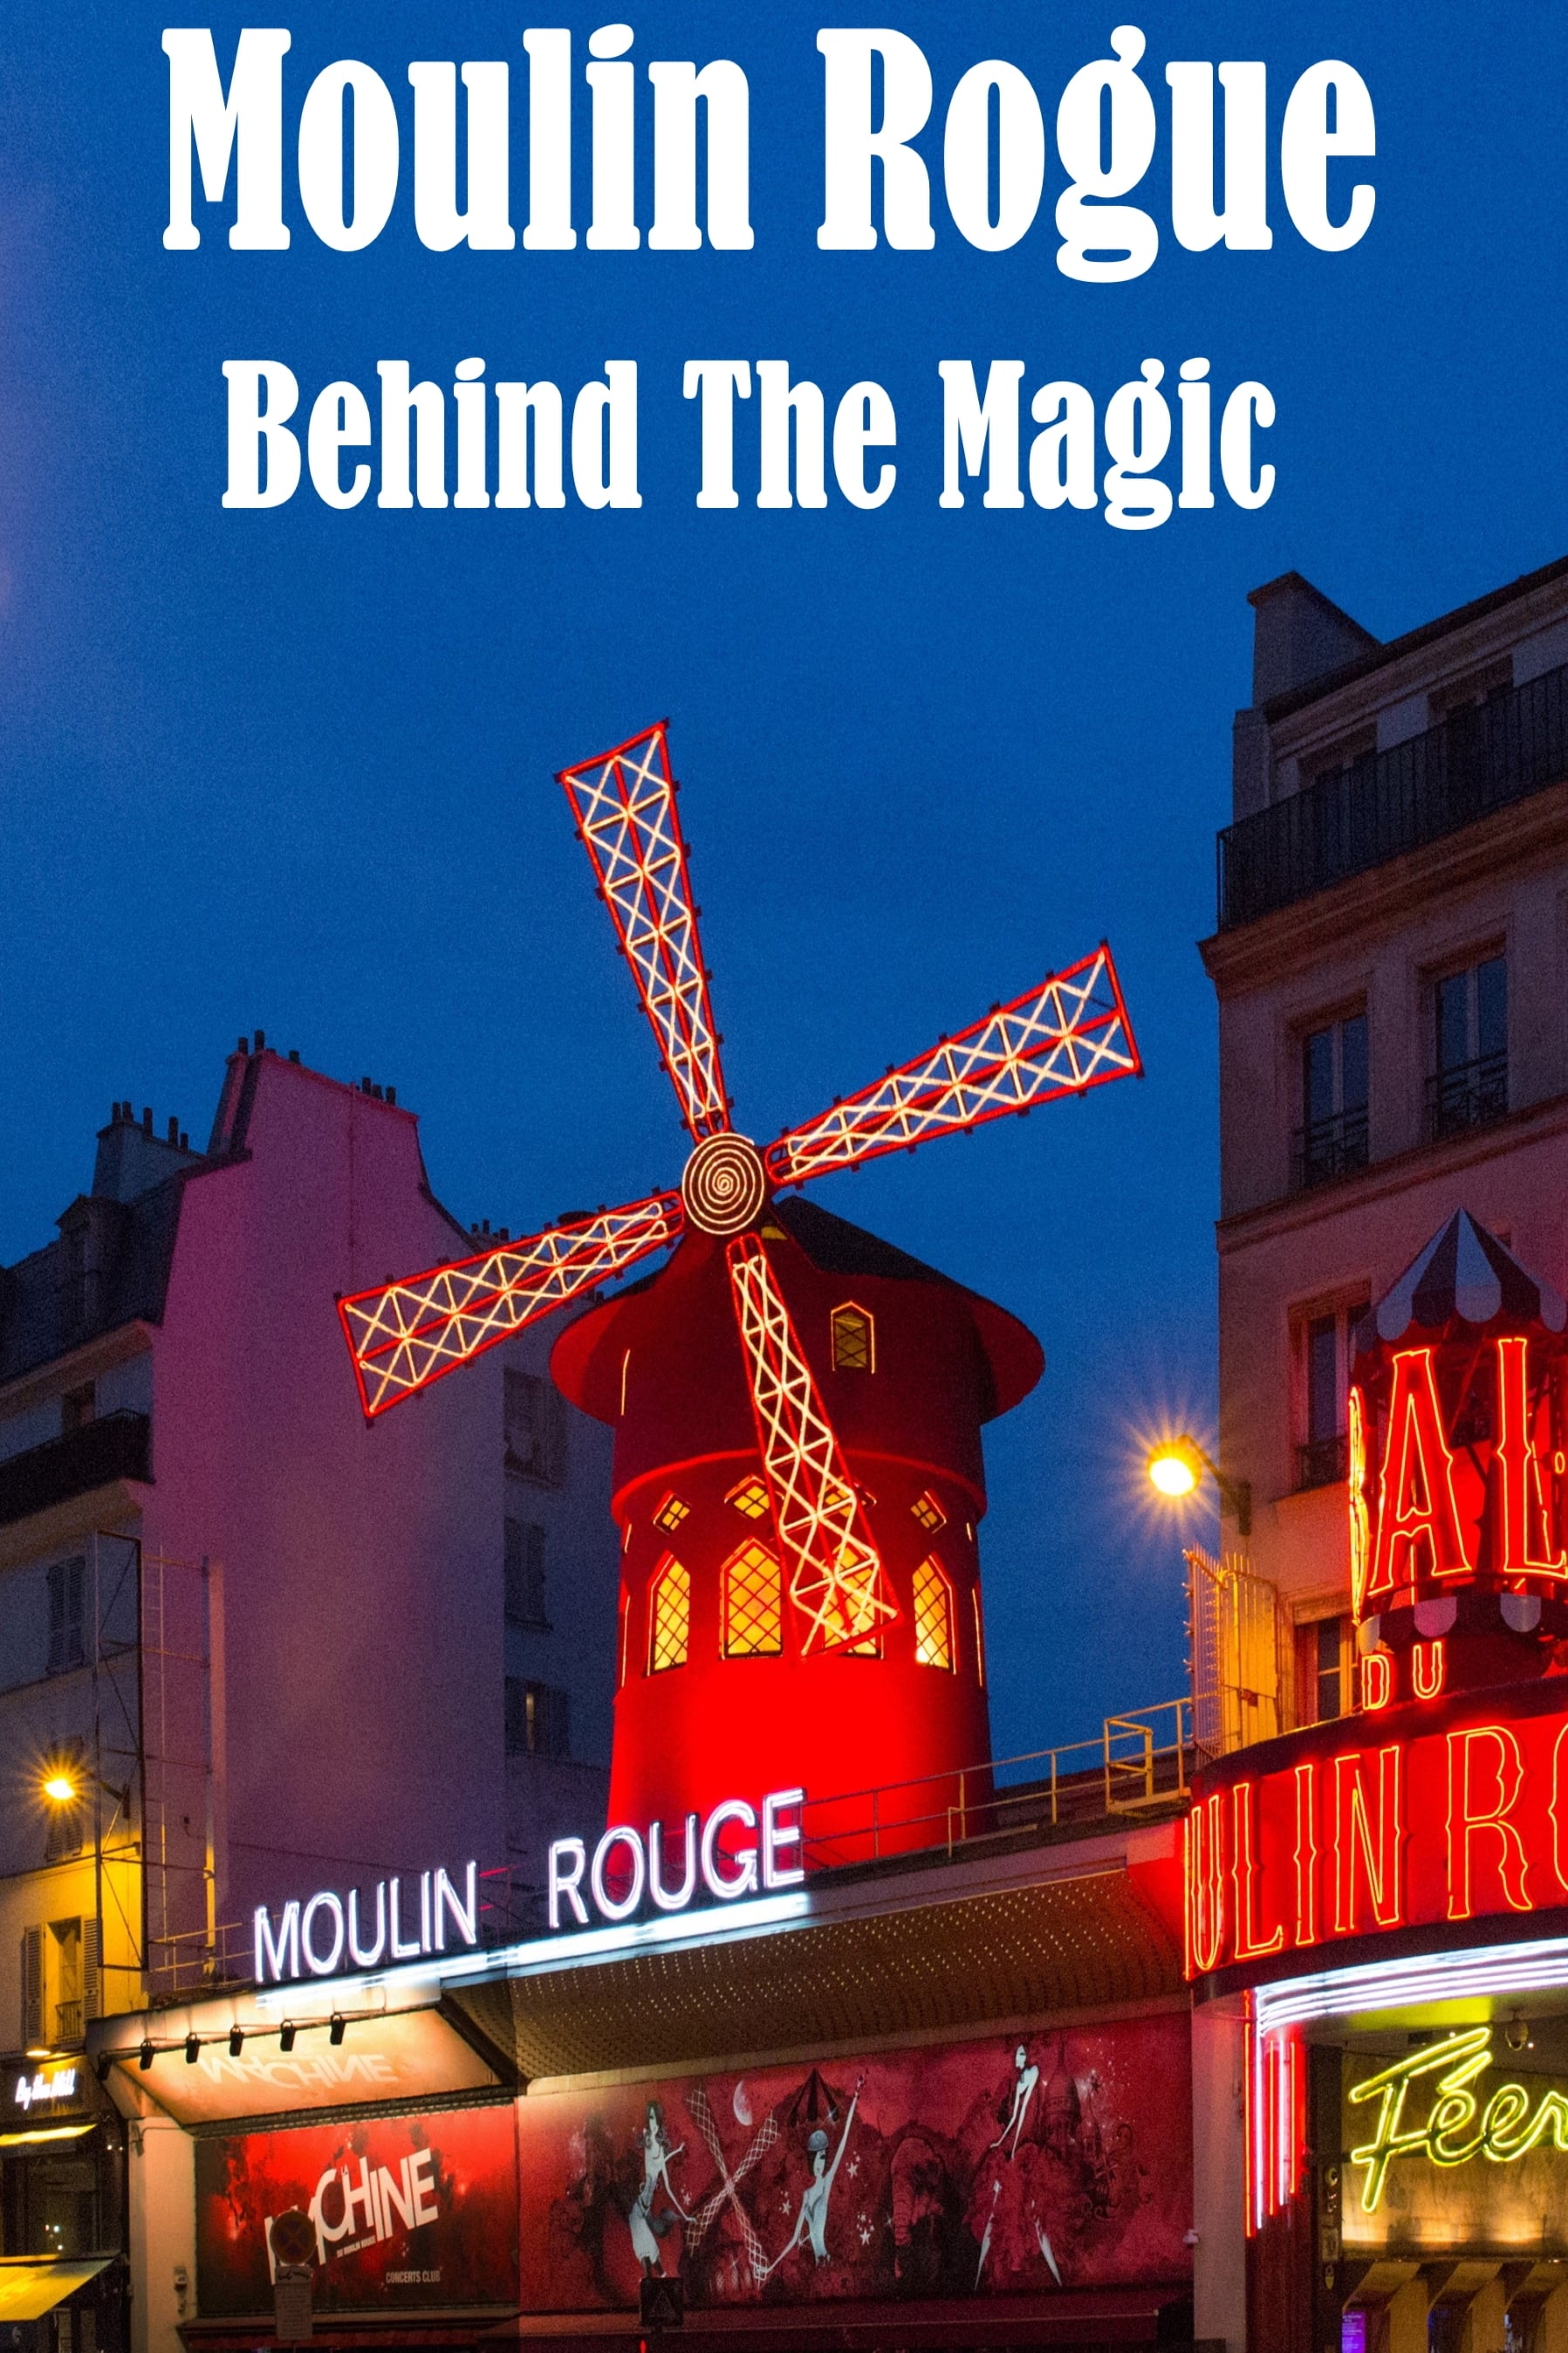 Moulin Rogue: Behind The Magic